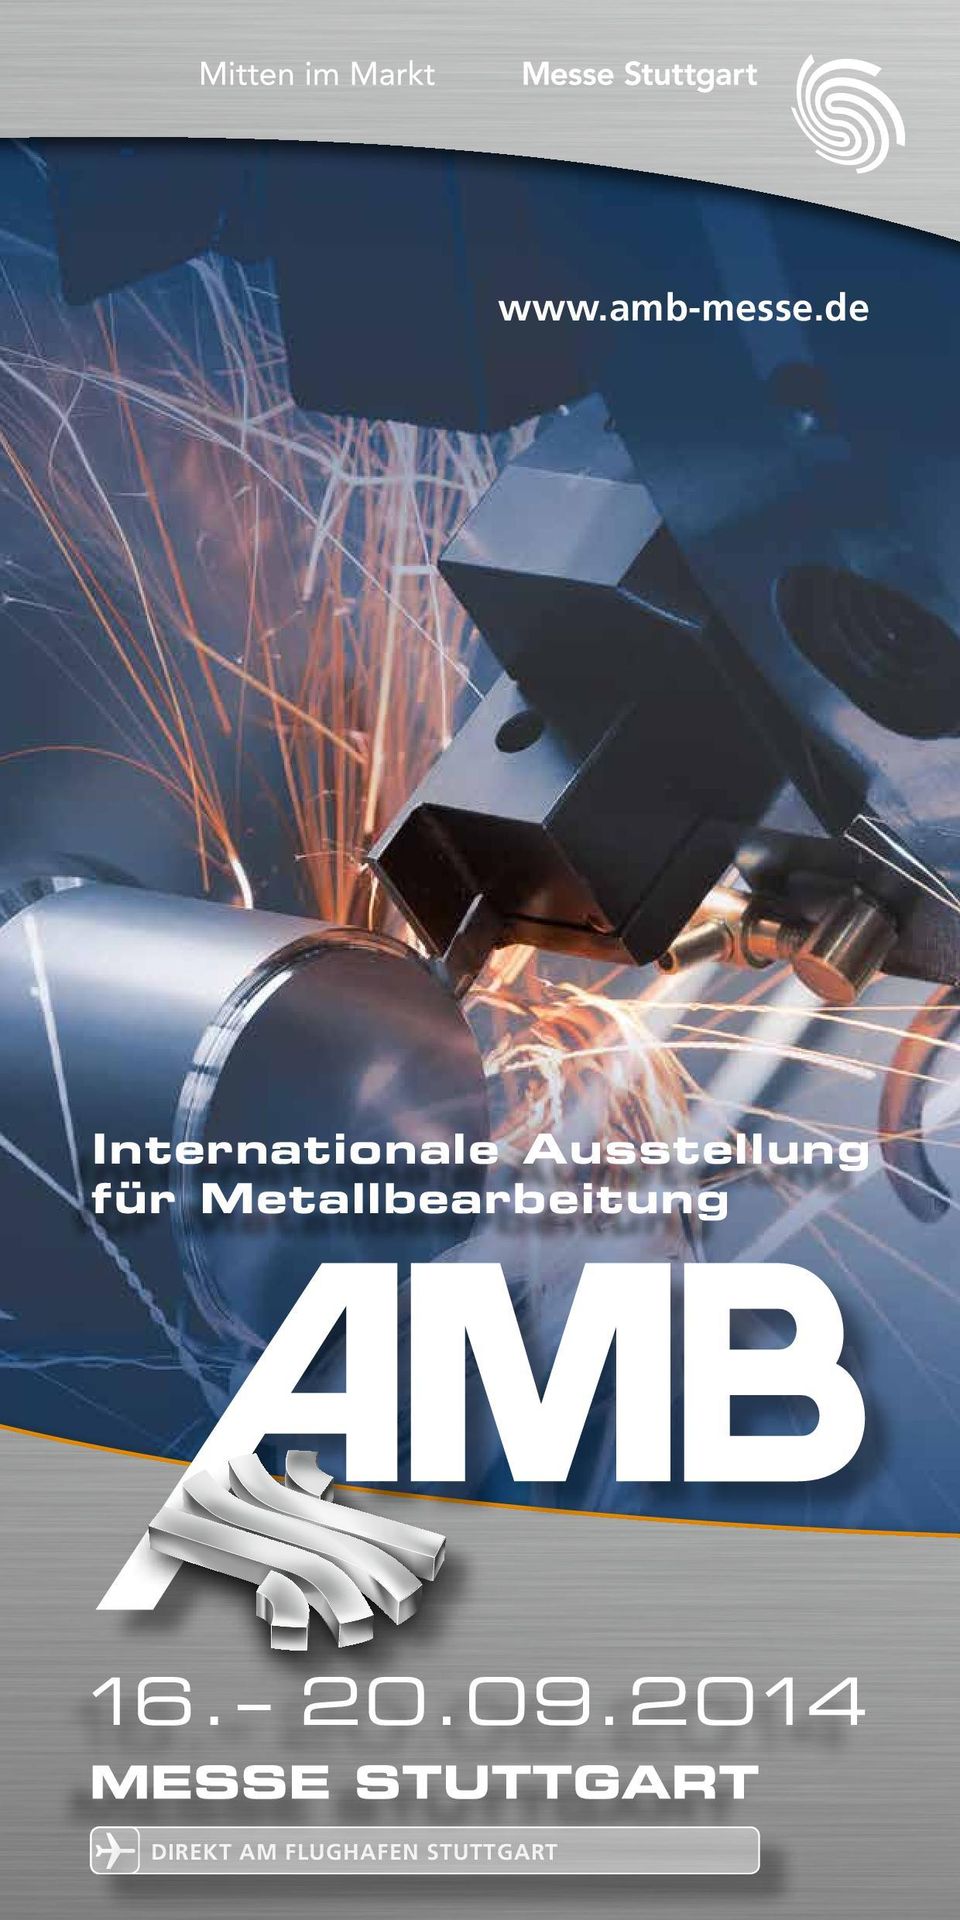 Metallbearbeitung International